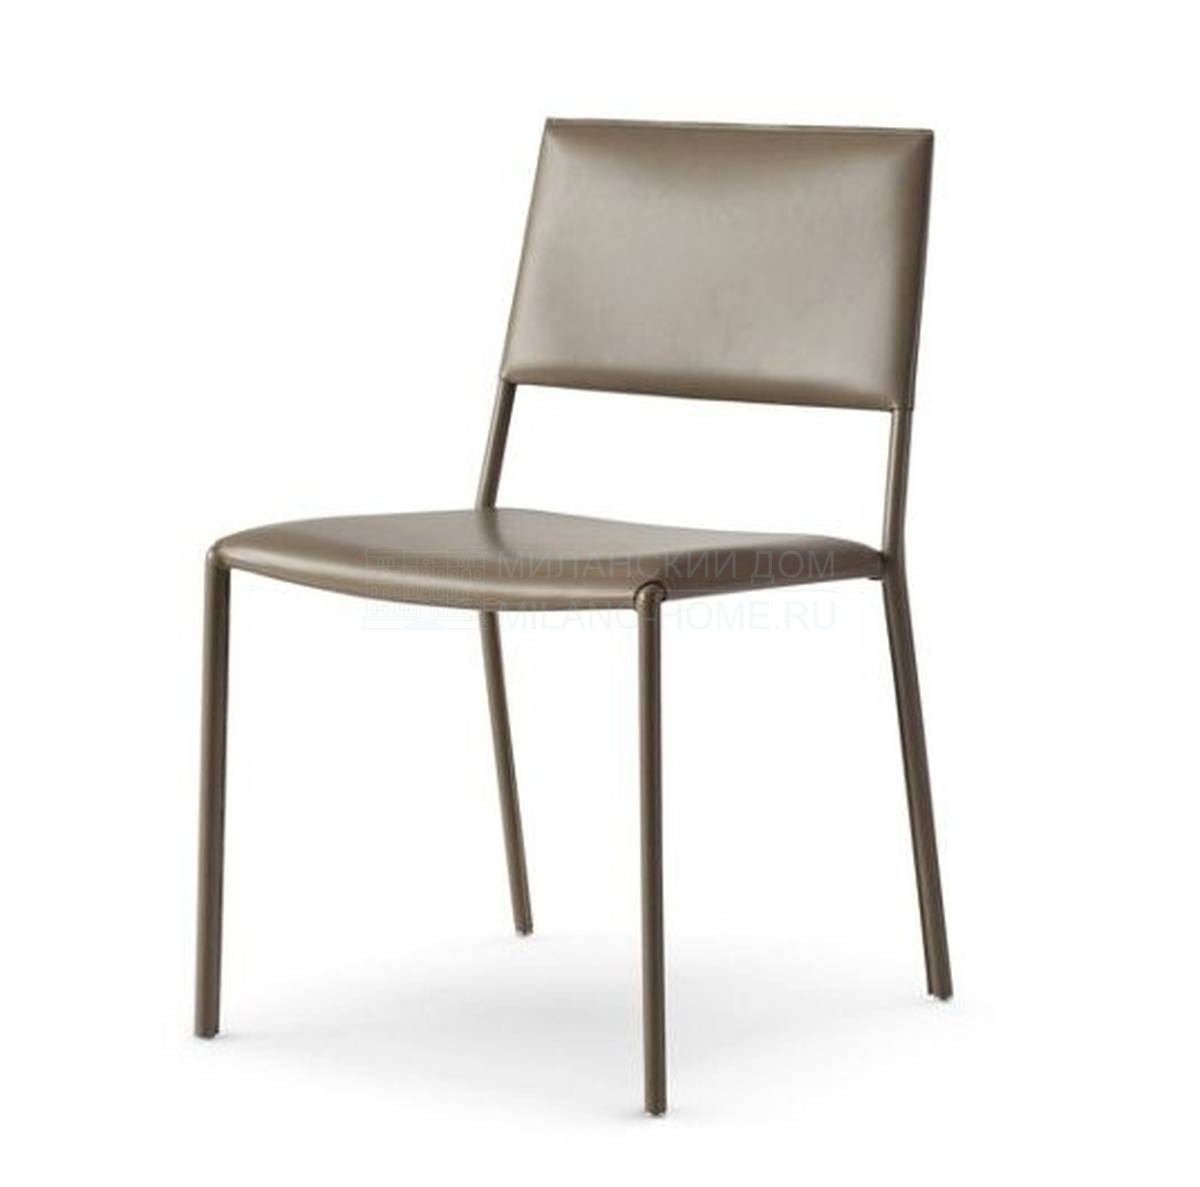 Металлический / Пластиковый стул Miki chair из Франции фабрики ROCHE BOBOIS